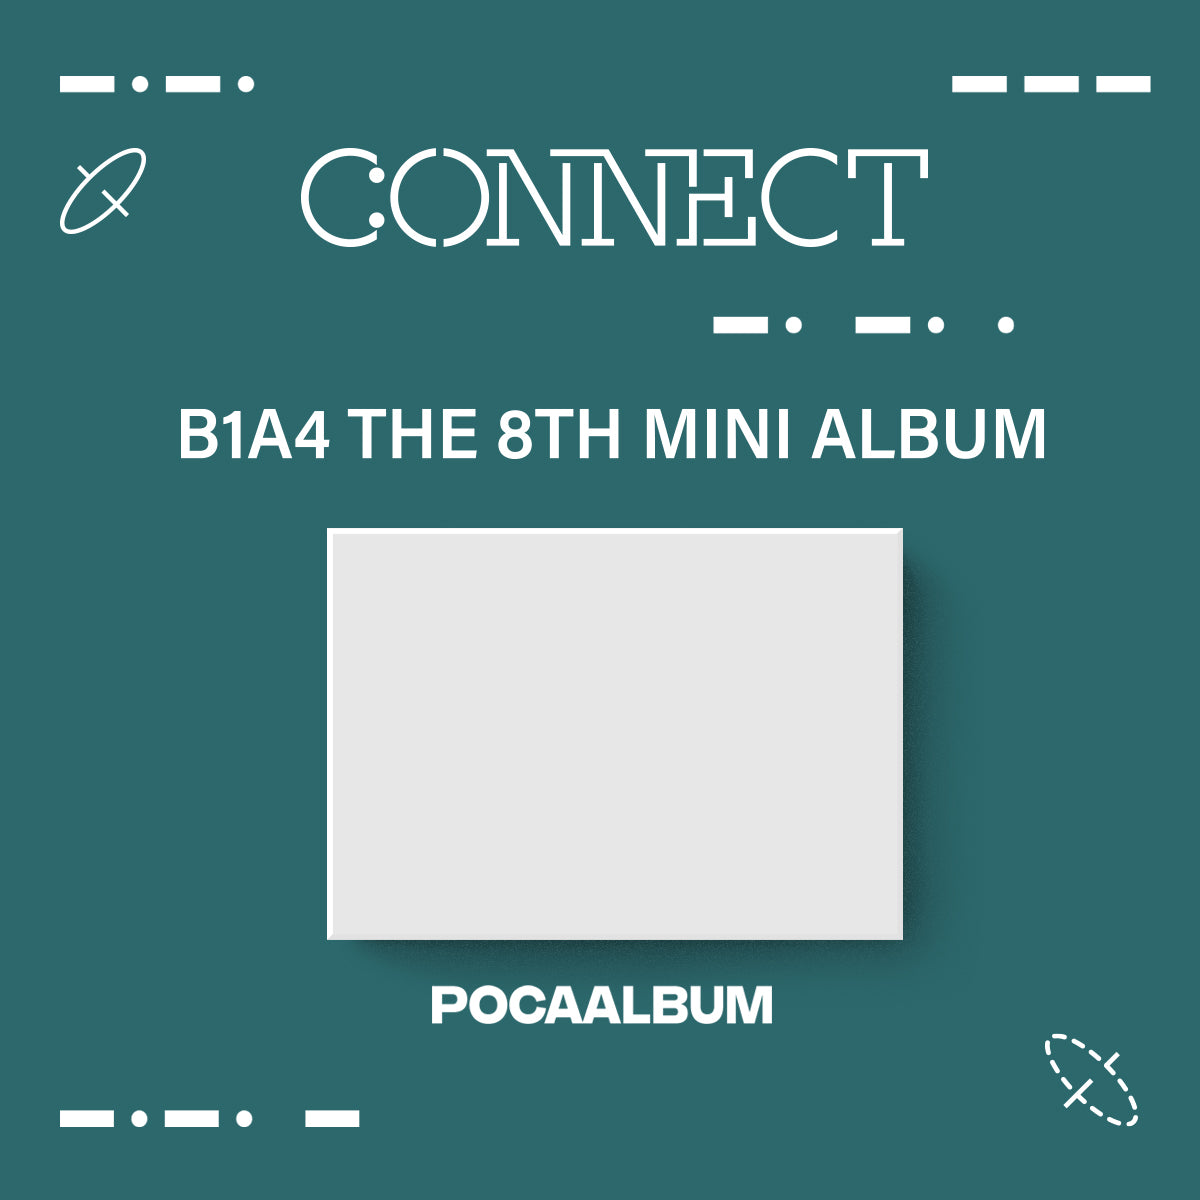 B1A4 - CONNECT 8TH MINI ALBUM POCALBUM